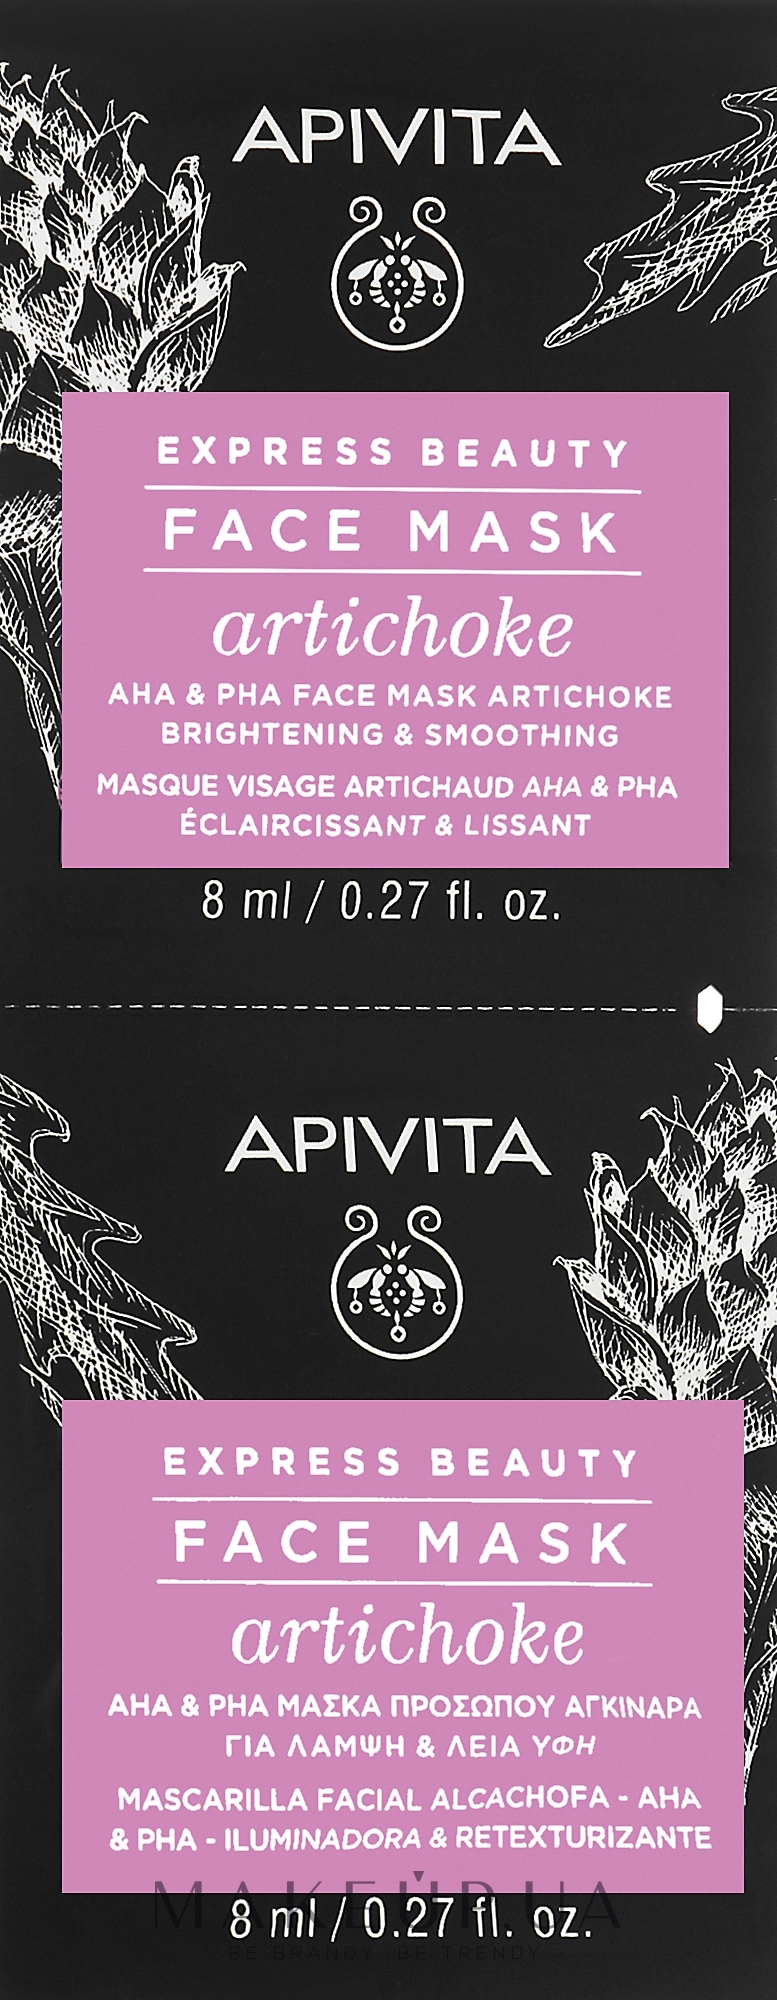 Маска для лица осветляющая с артишоком - Apivita Express Beauty Aha & Pha Face Mask Artichoke Brightening & Smoothing (мини) — фото 2x8ml